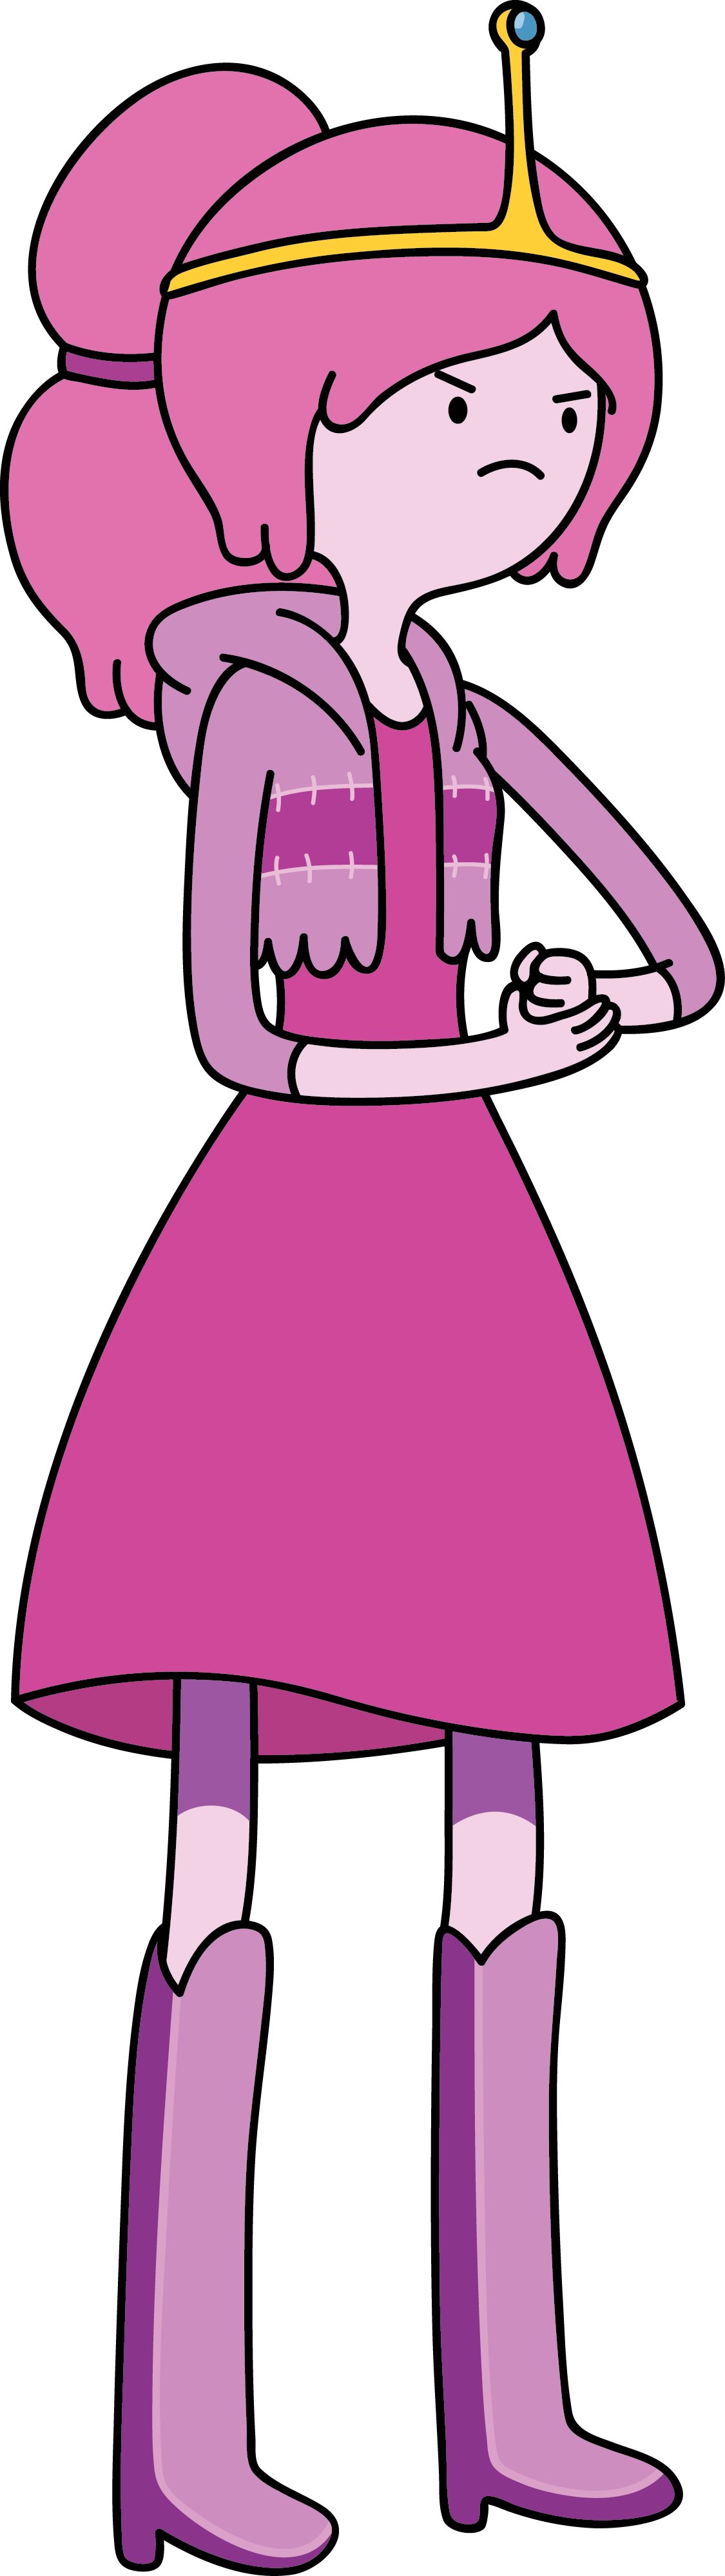 Princess Bubblegum - Google Search - Princess Bubblegum (1125x3998)